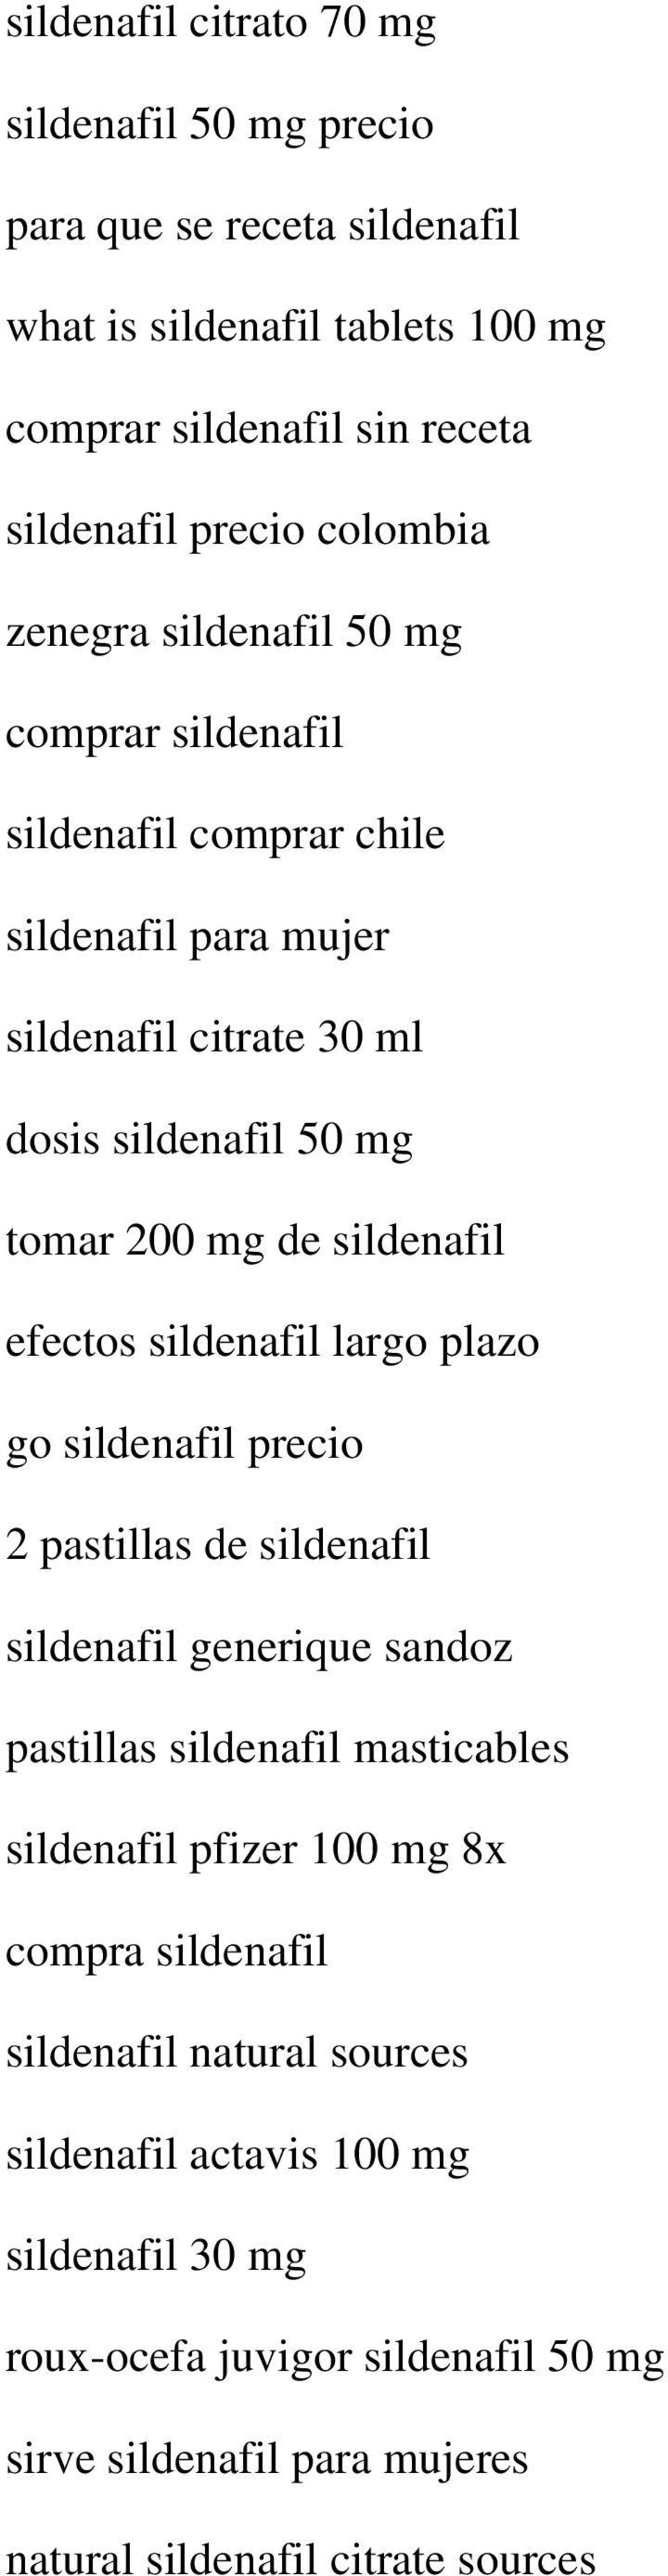 efectos sildenafil largo plazo go sildenafil precio 2 pastillas de sildenafil sildenafil generique sandoz pastillas sildenafil masticables sildenafil pfizer 100 mg 8x